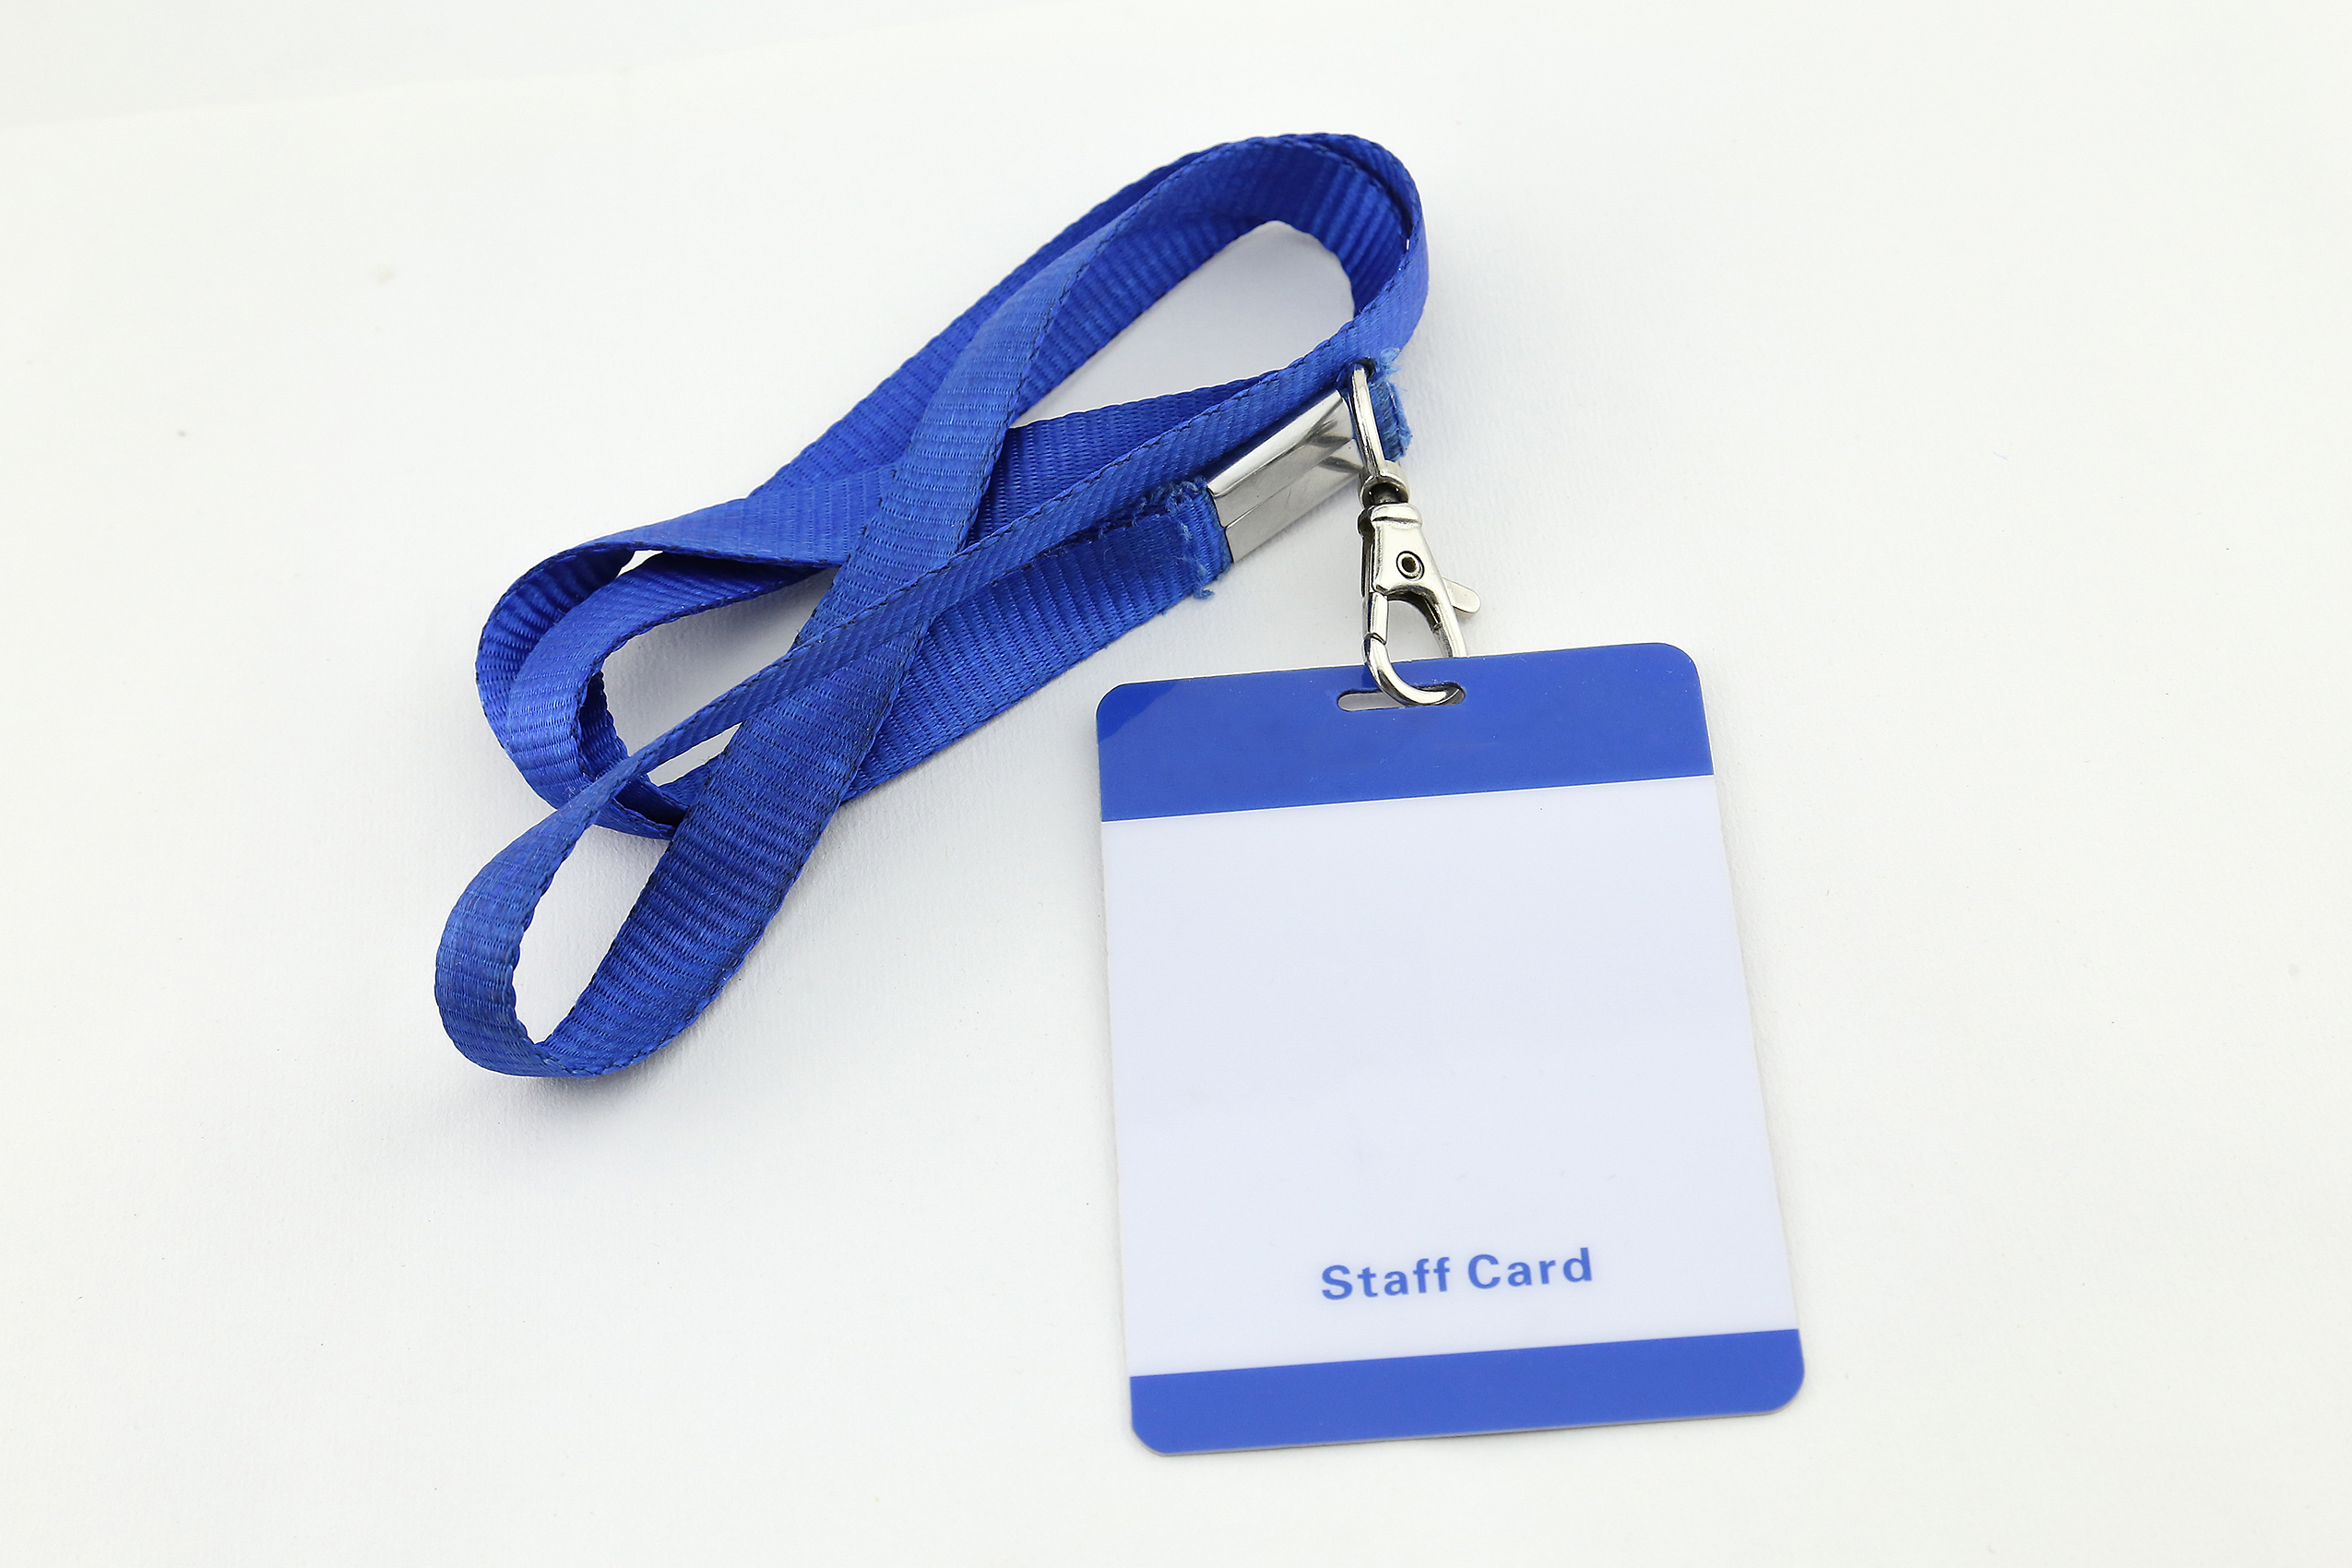 Staff Card Lanyard (shutterstock)